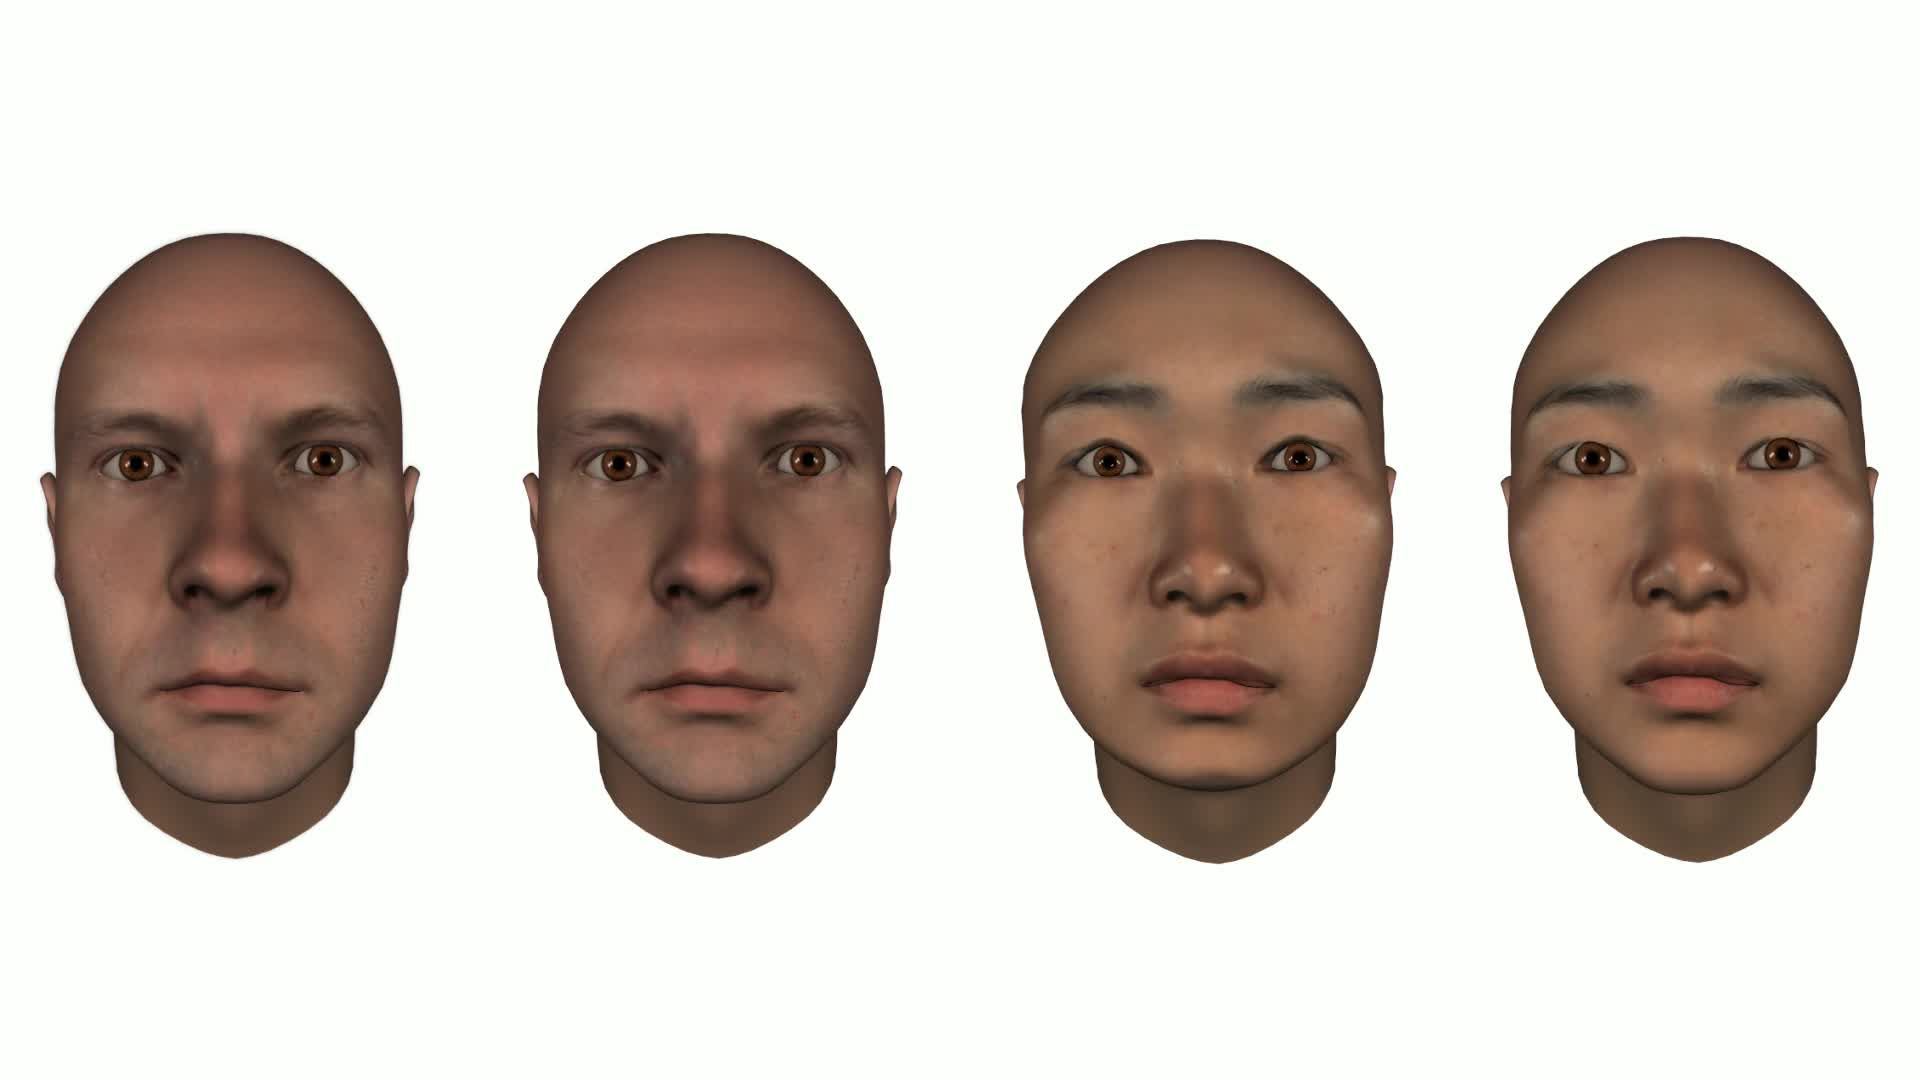 Facial features and national origin